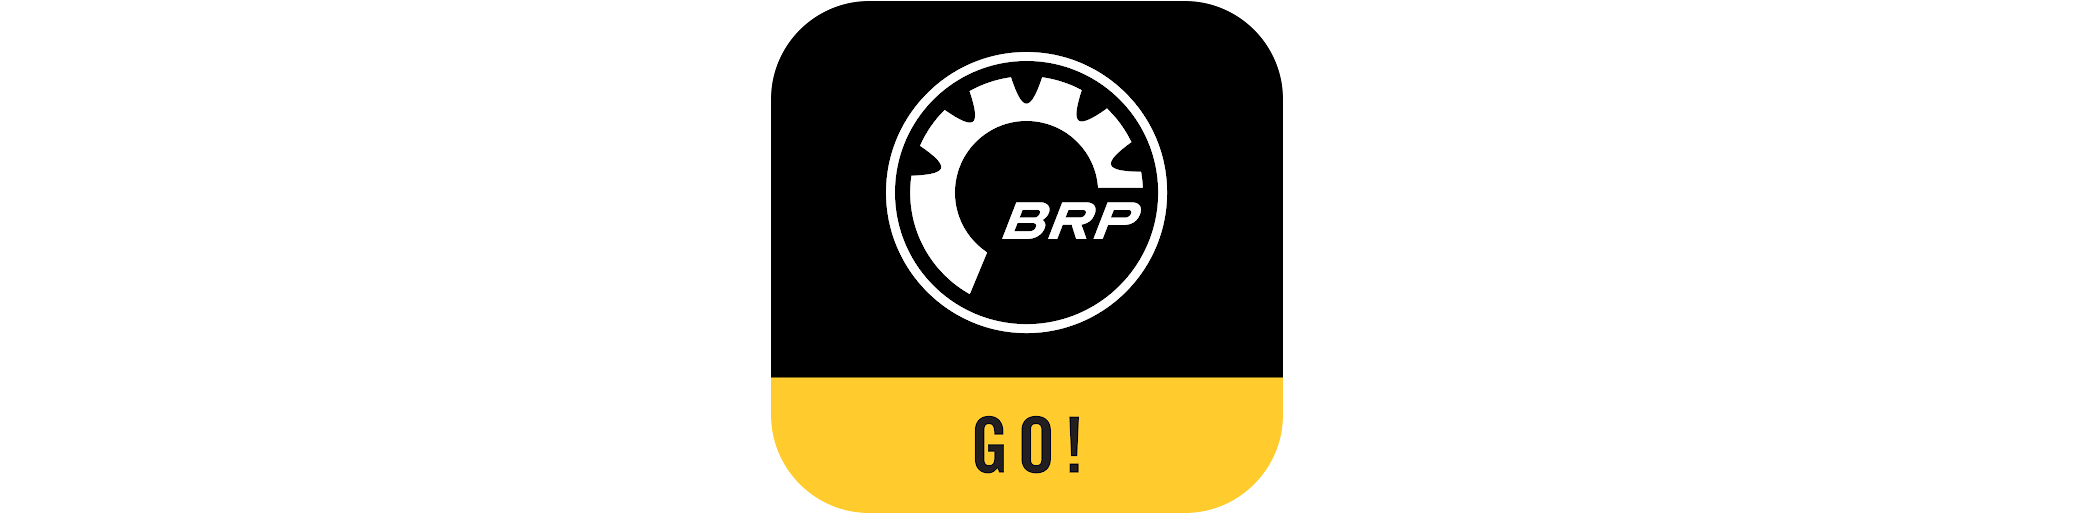 BRP GO! logotip aplikacije